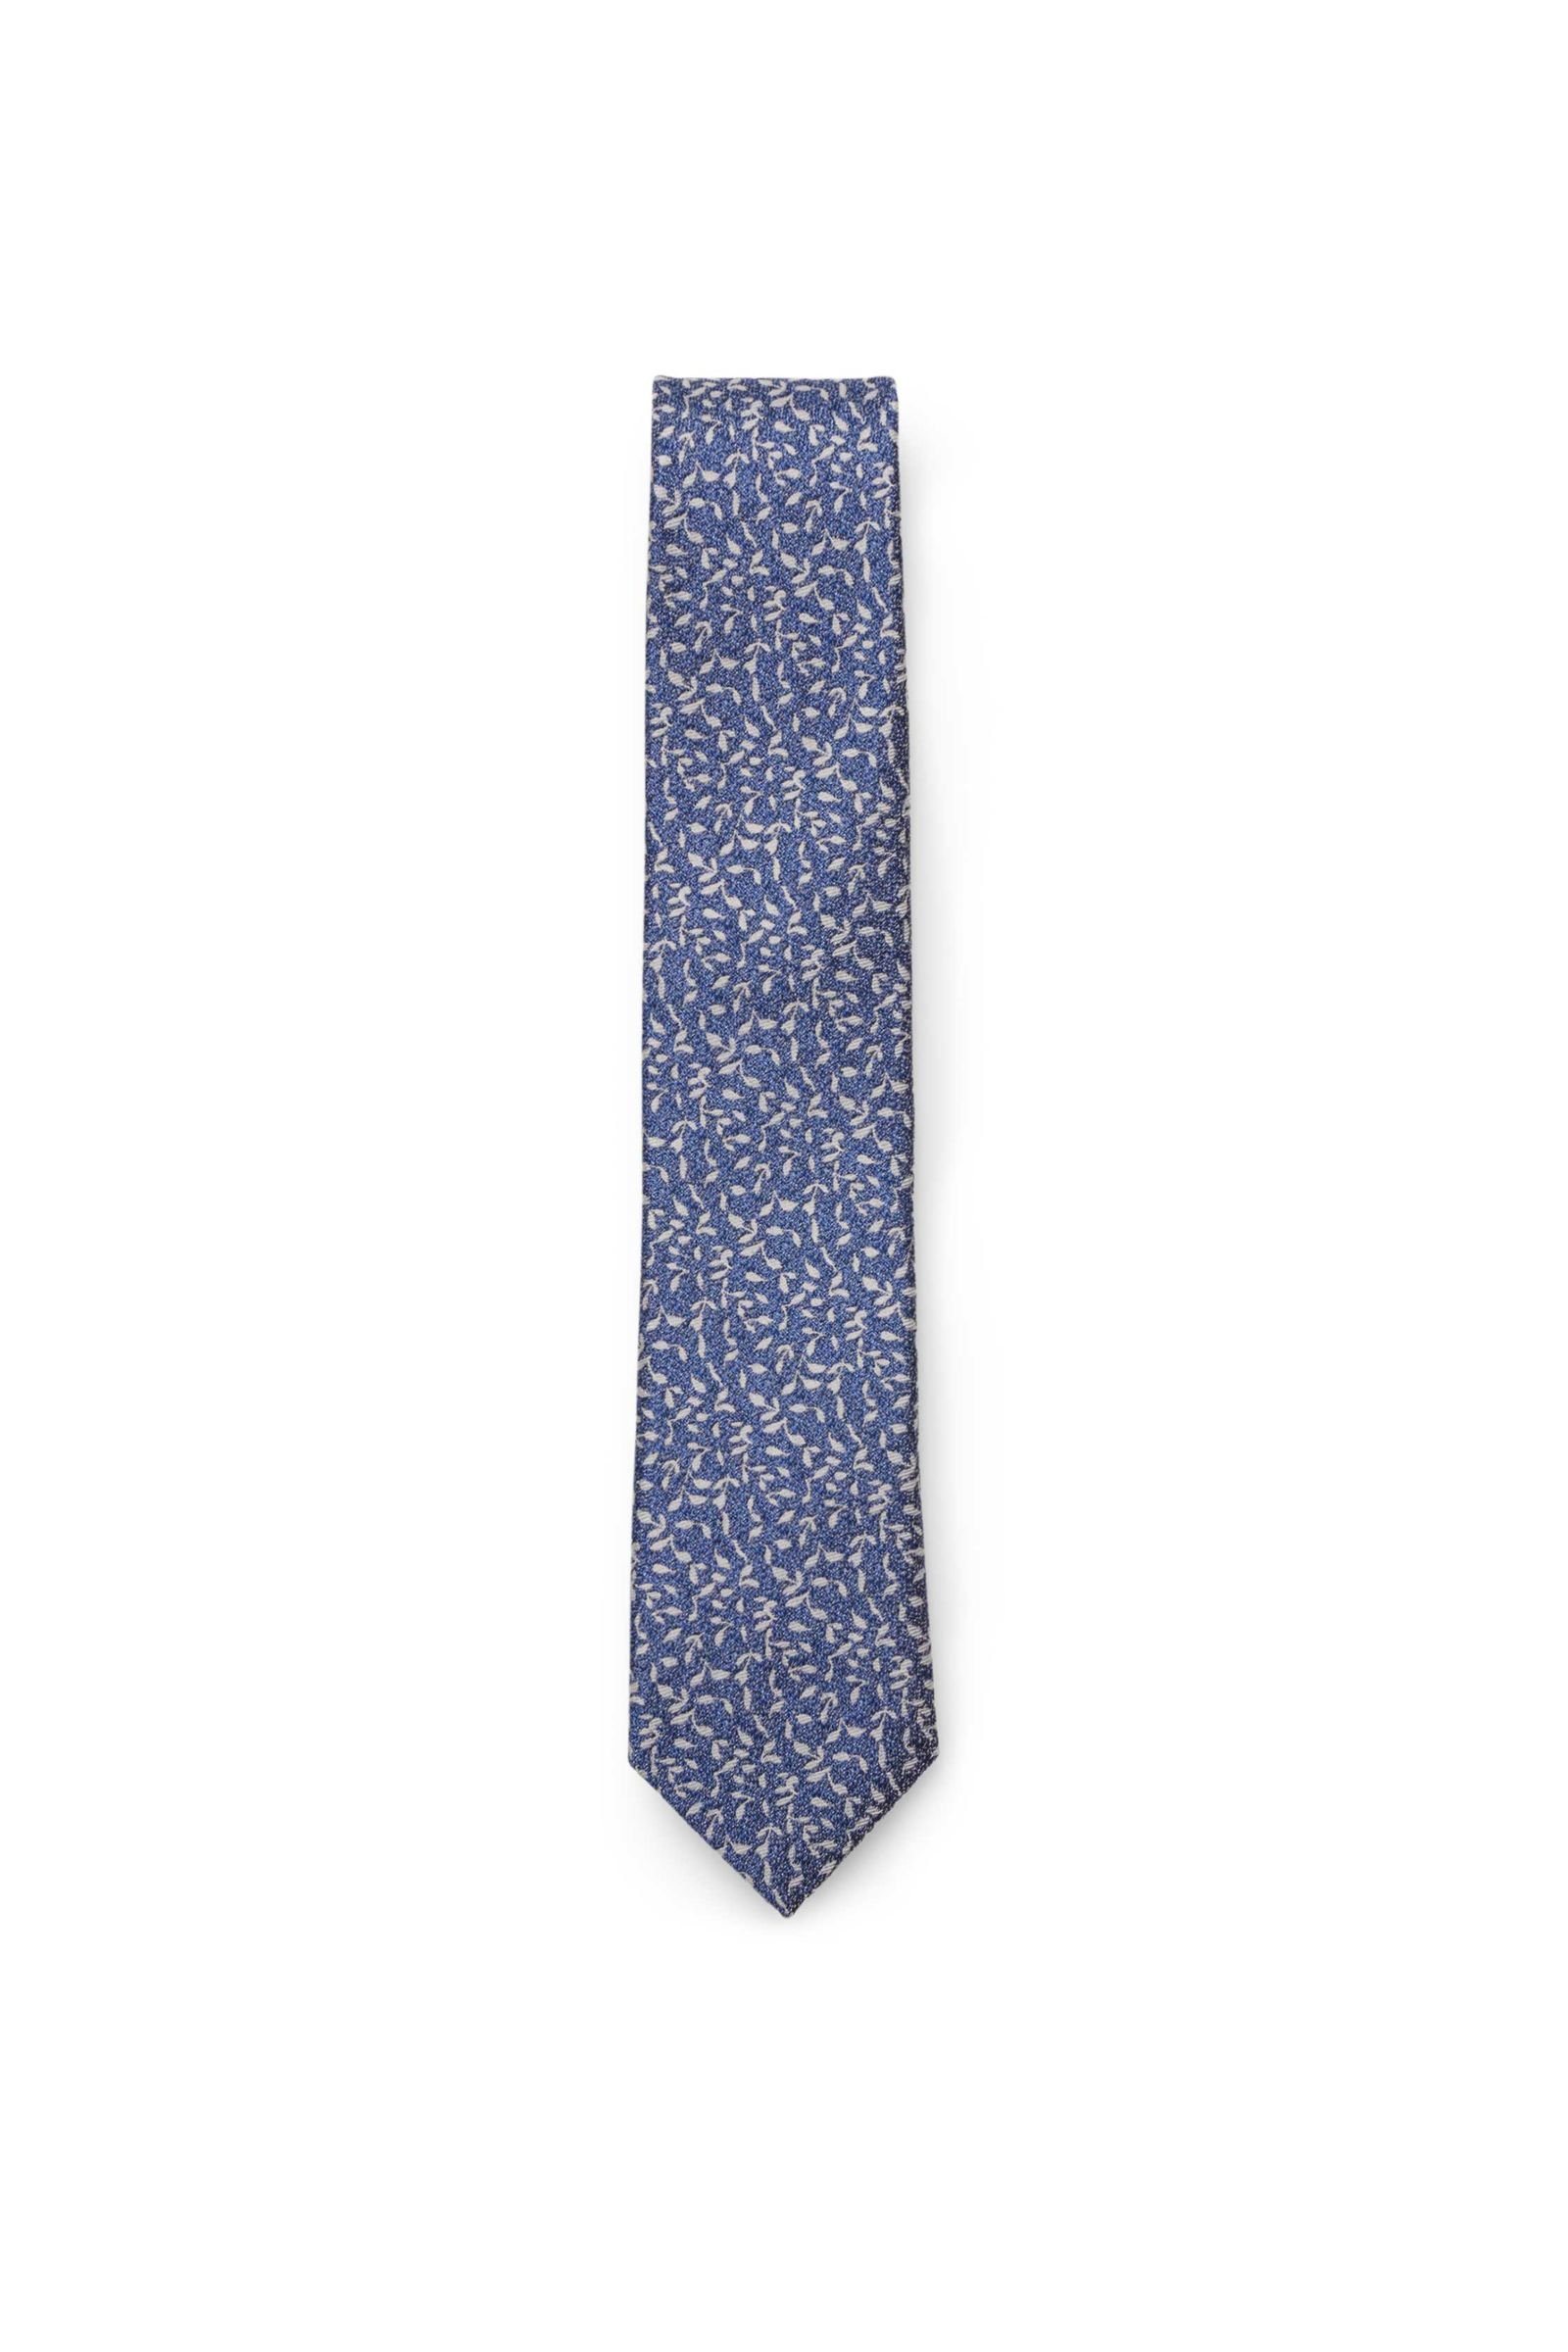 Silk tie dark blue patterned